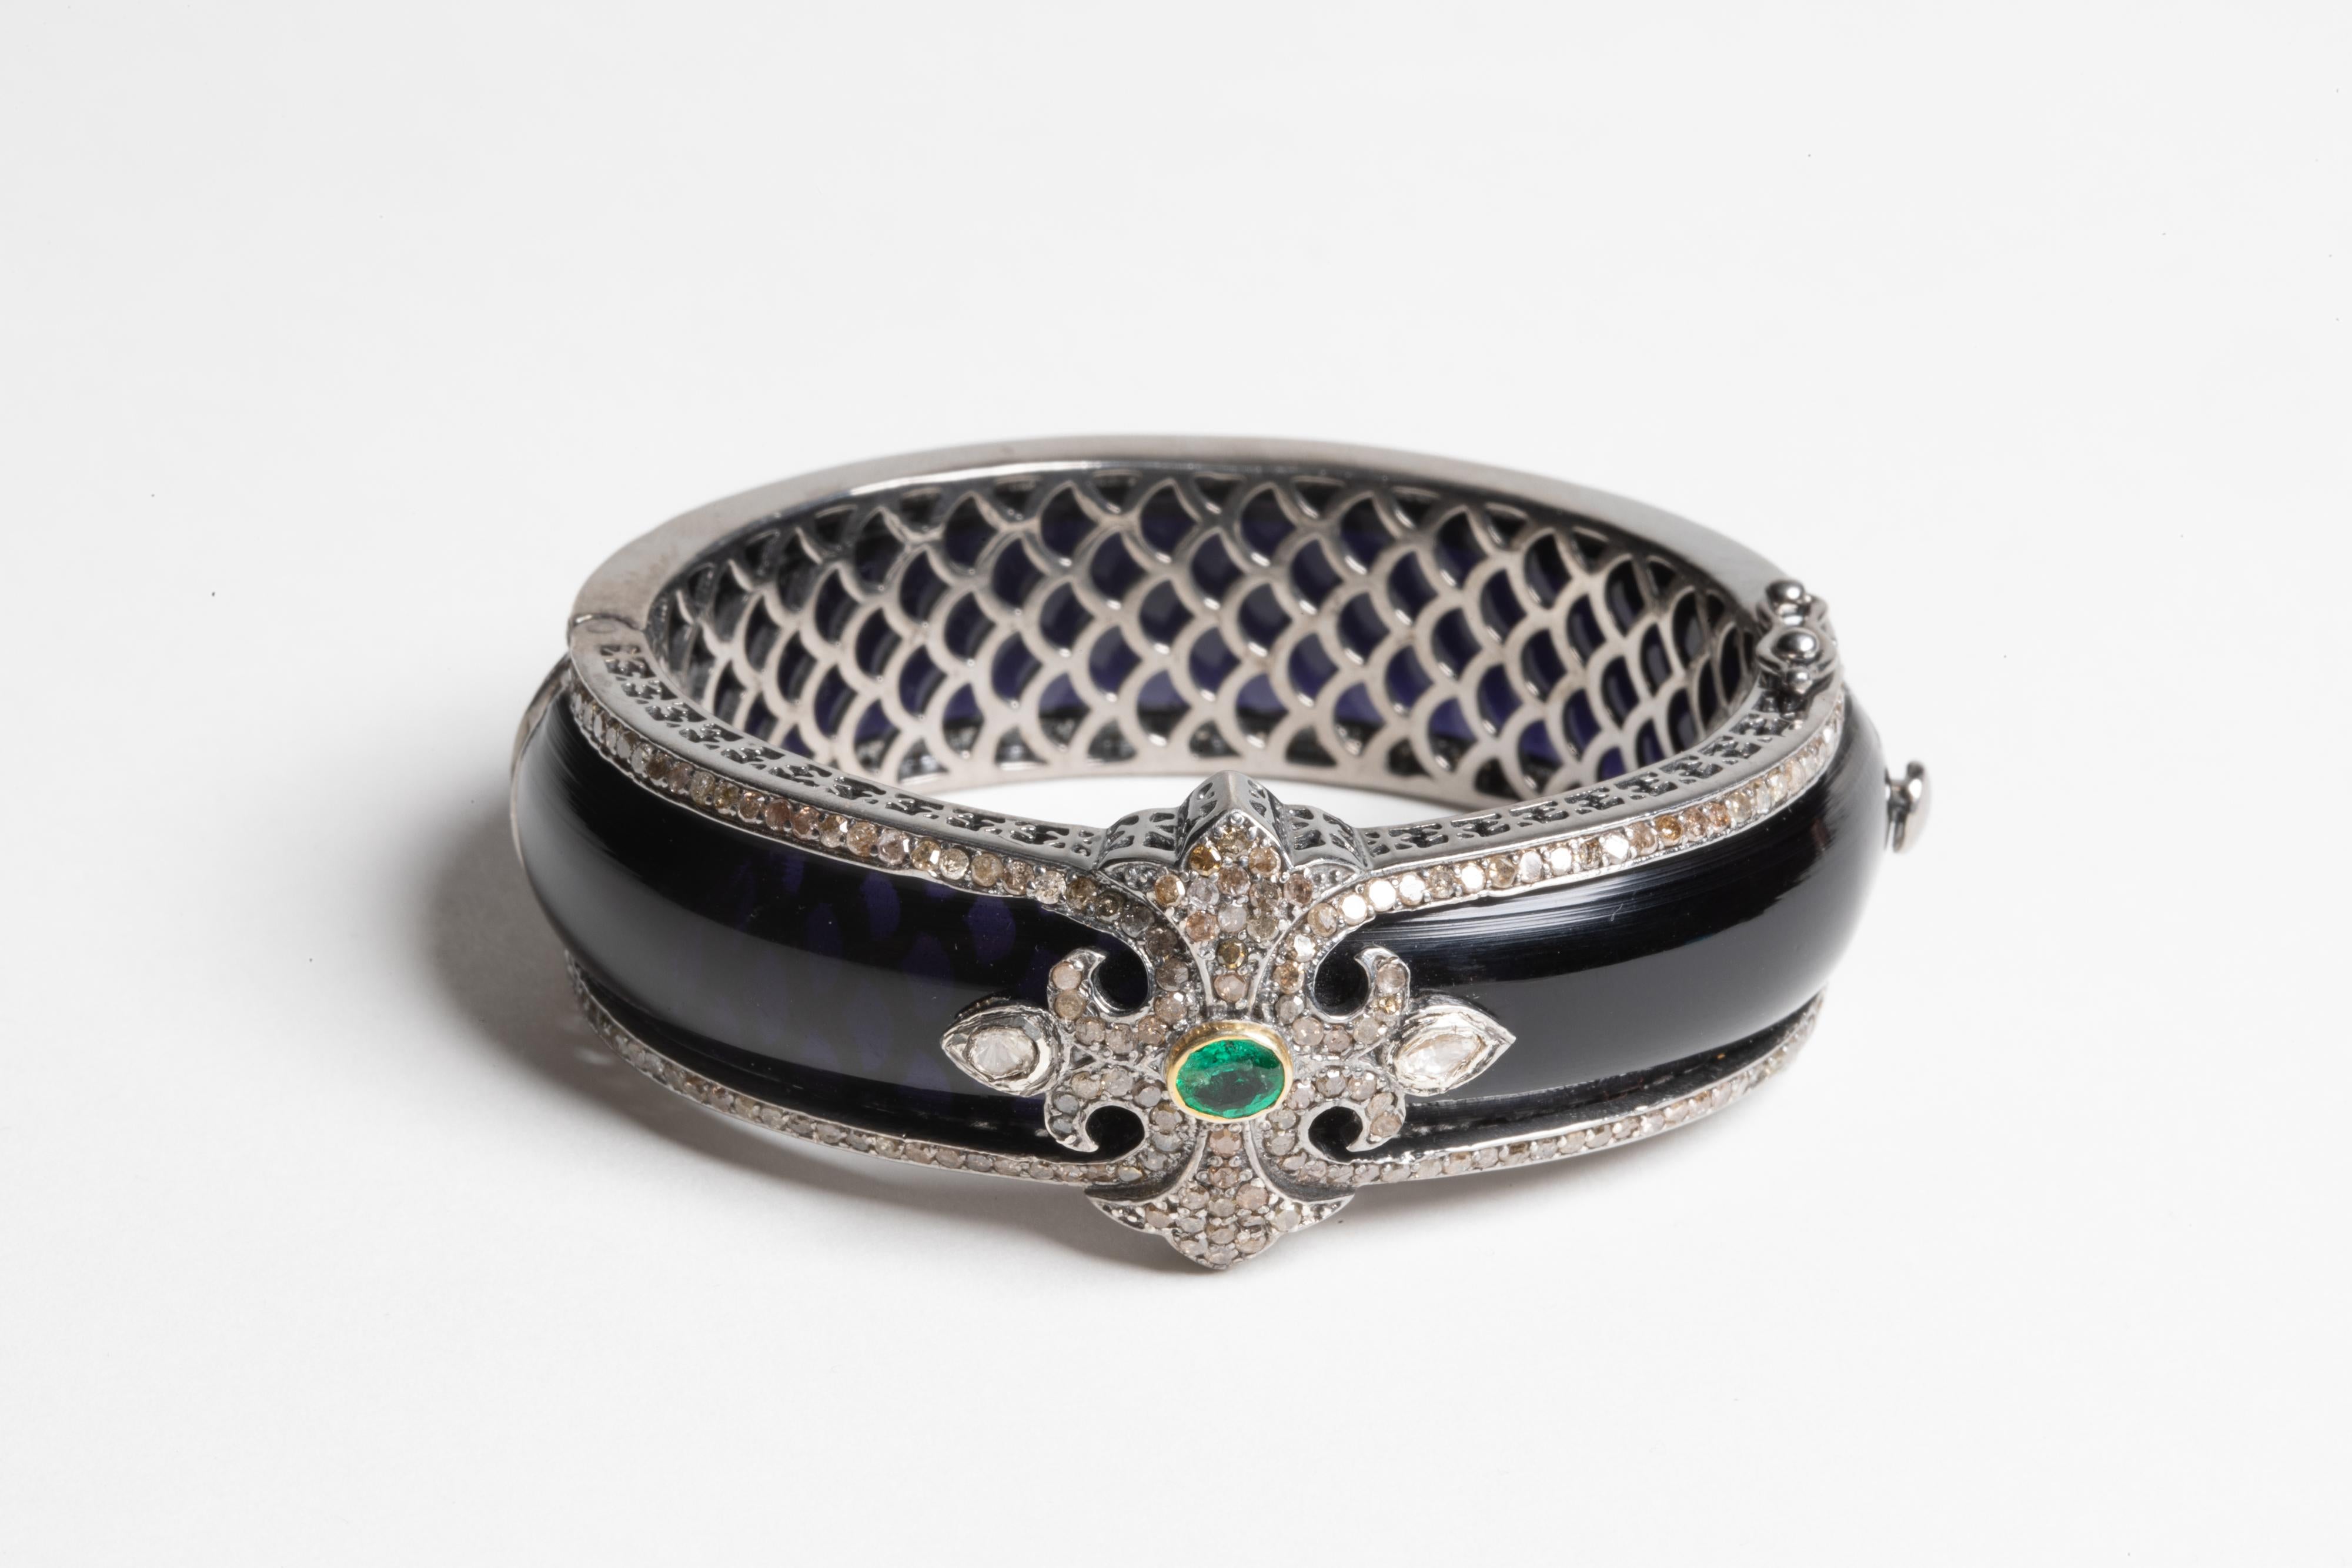 Oval Cut Black Bakelite, Diamond, Emerald and Sterling Silver Bracelet